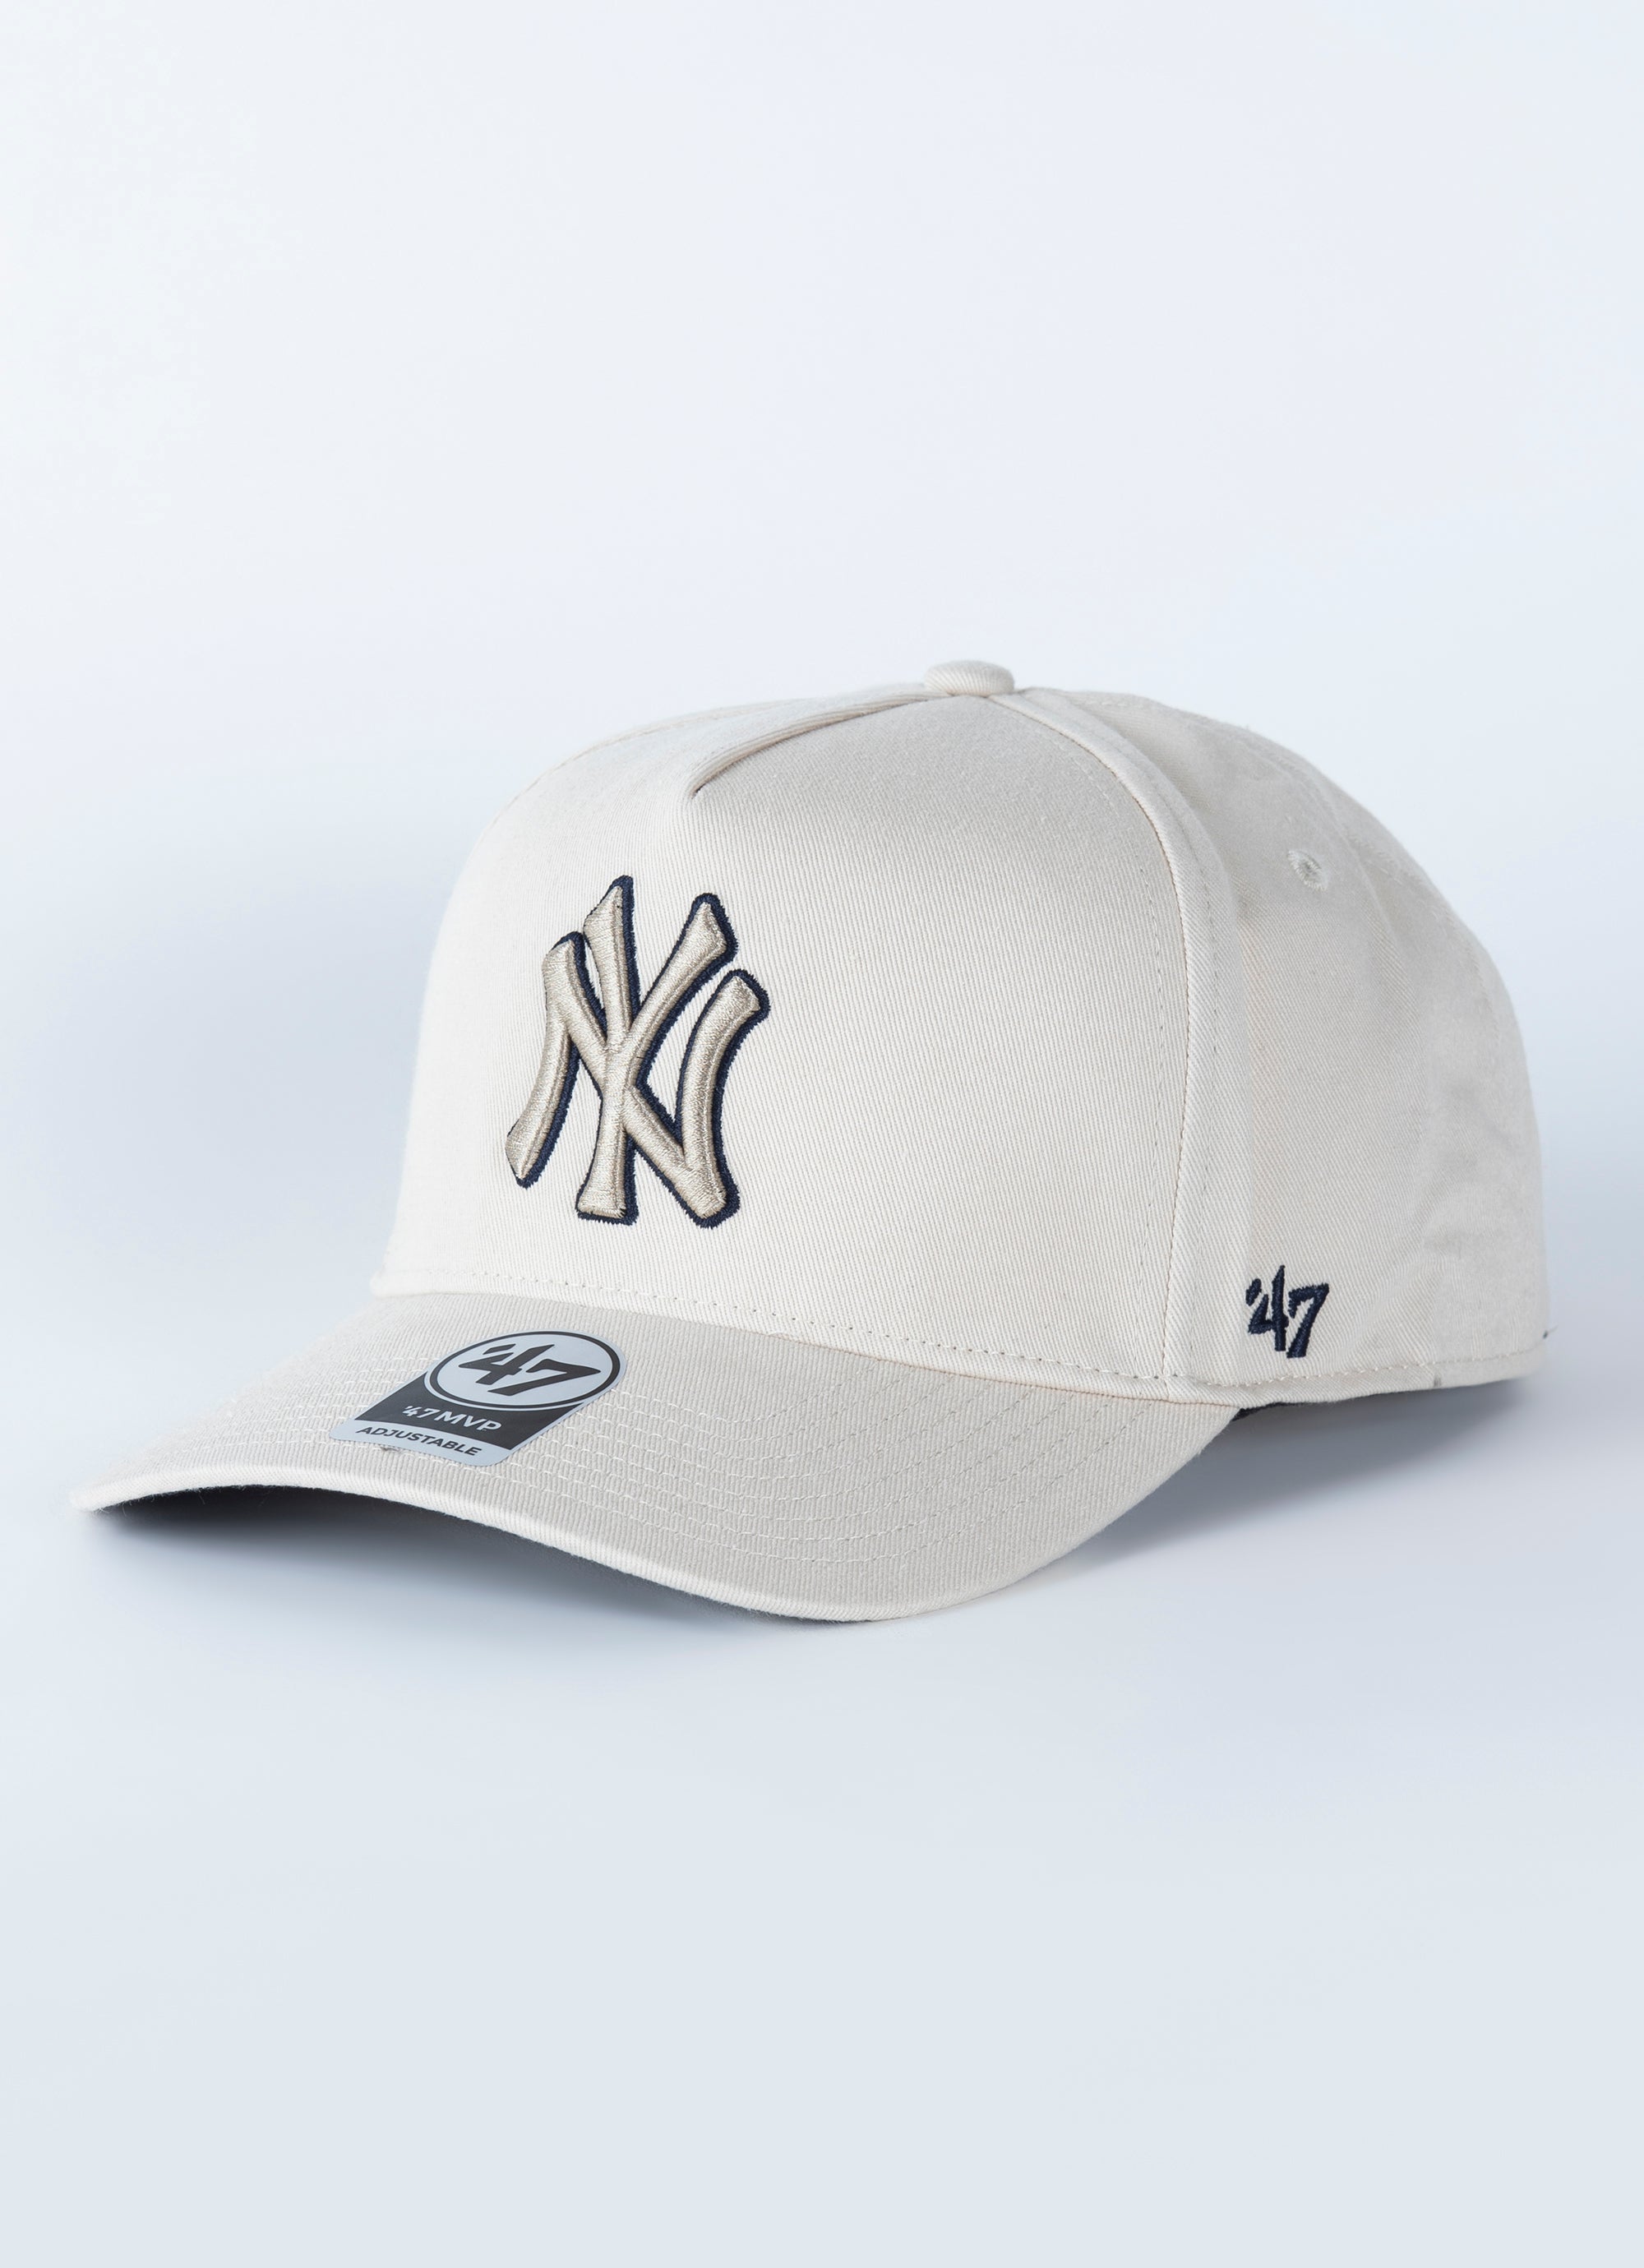 '47 New York Yankees MVP Legend cap 